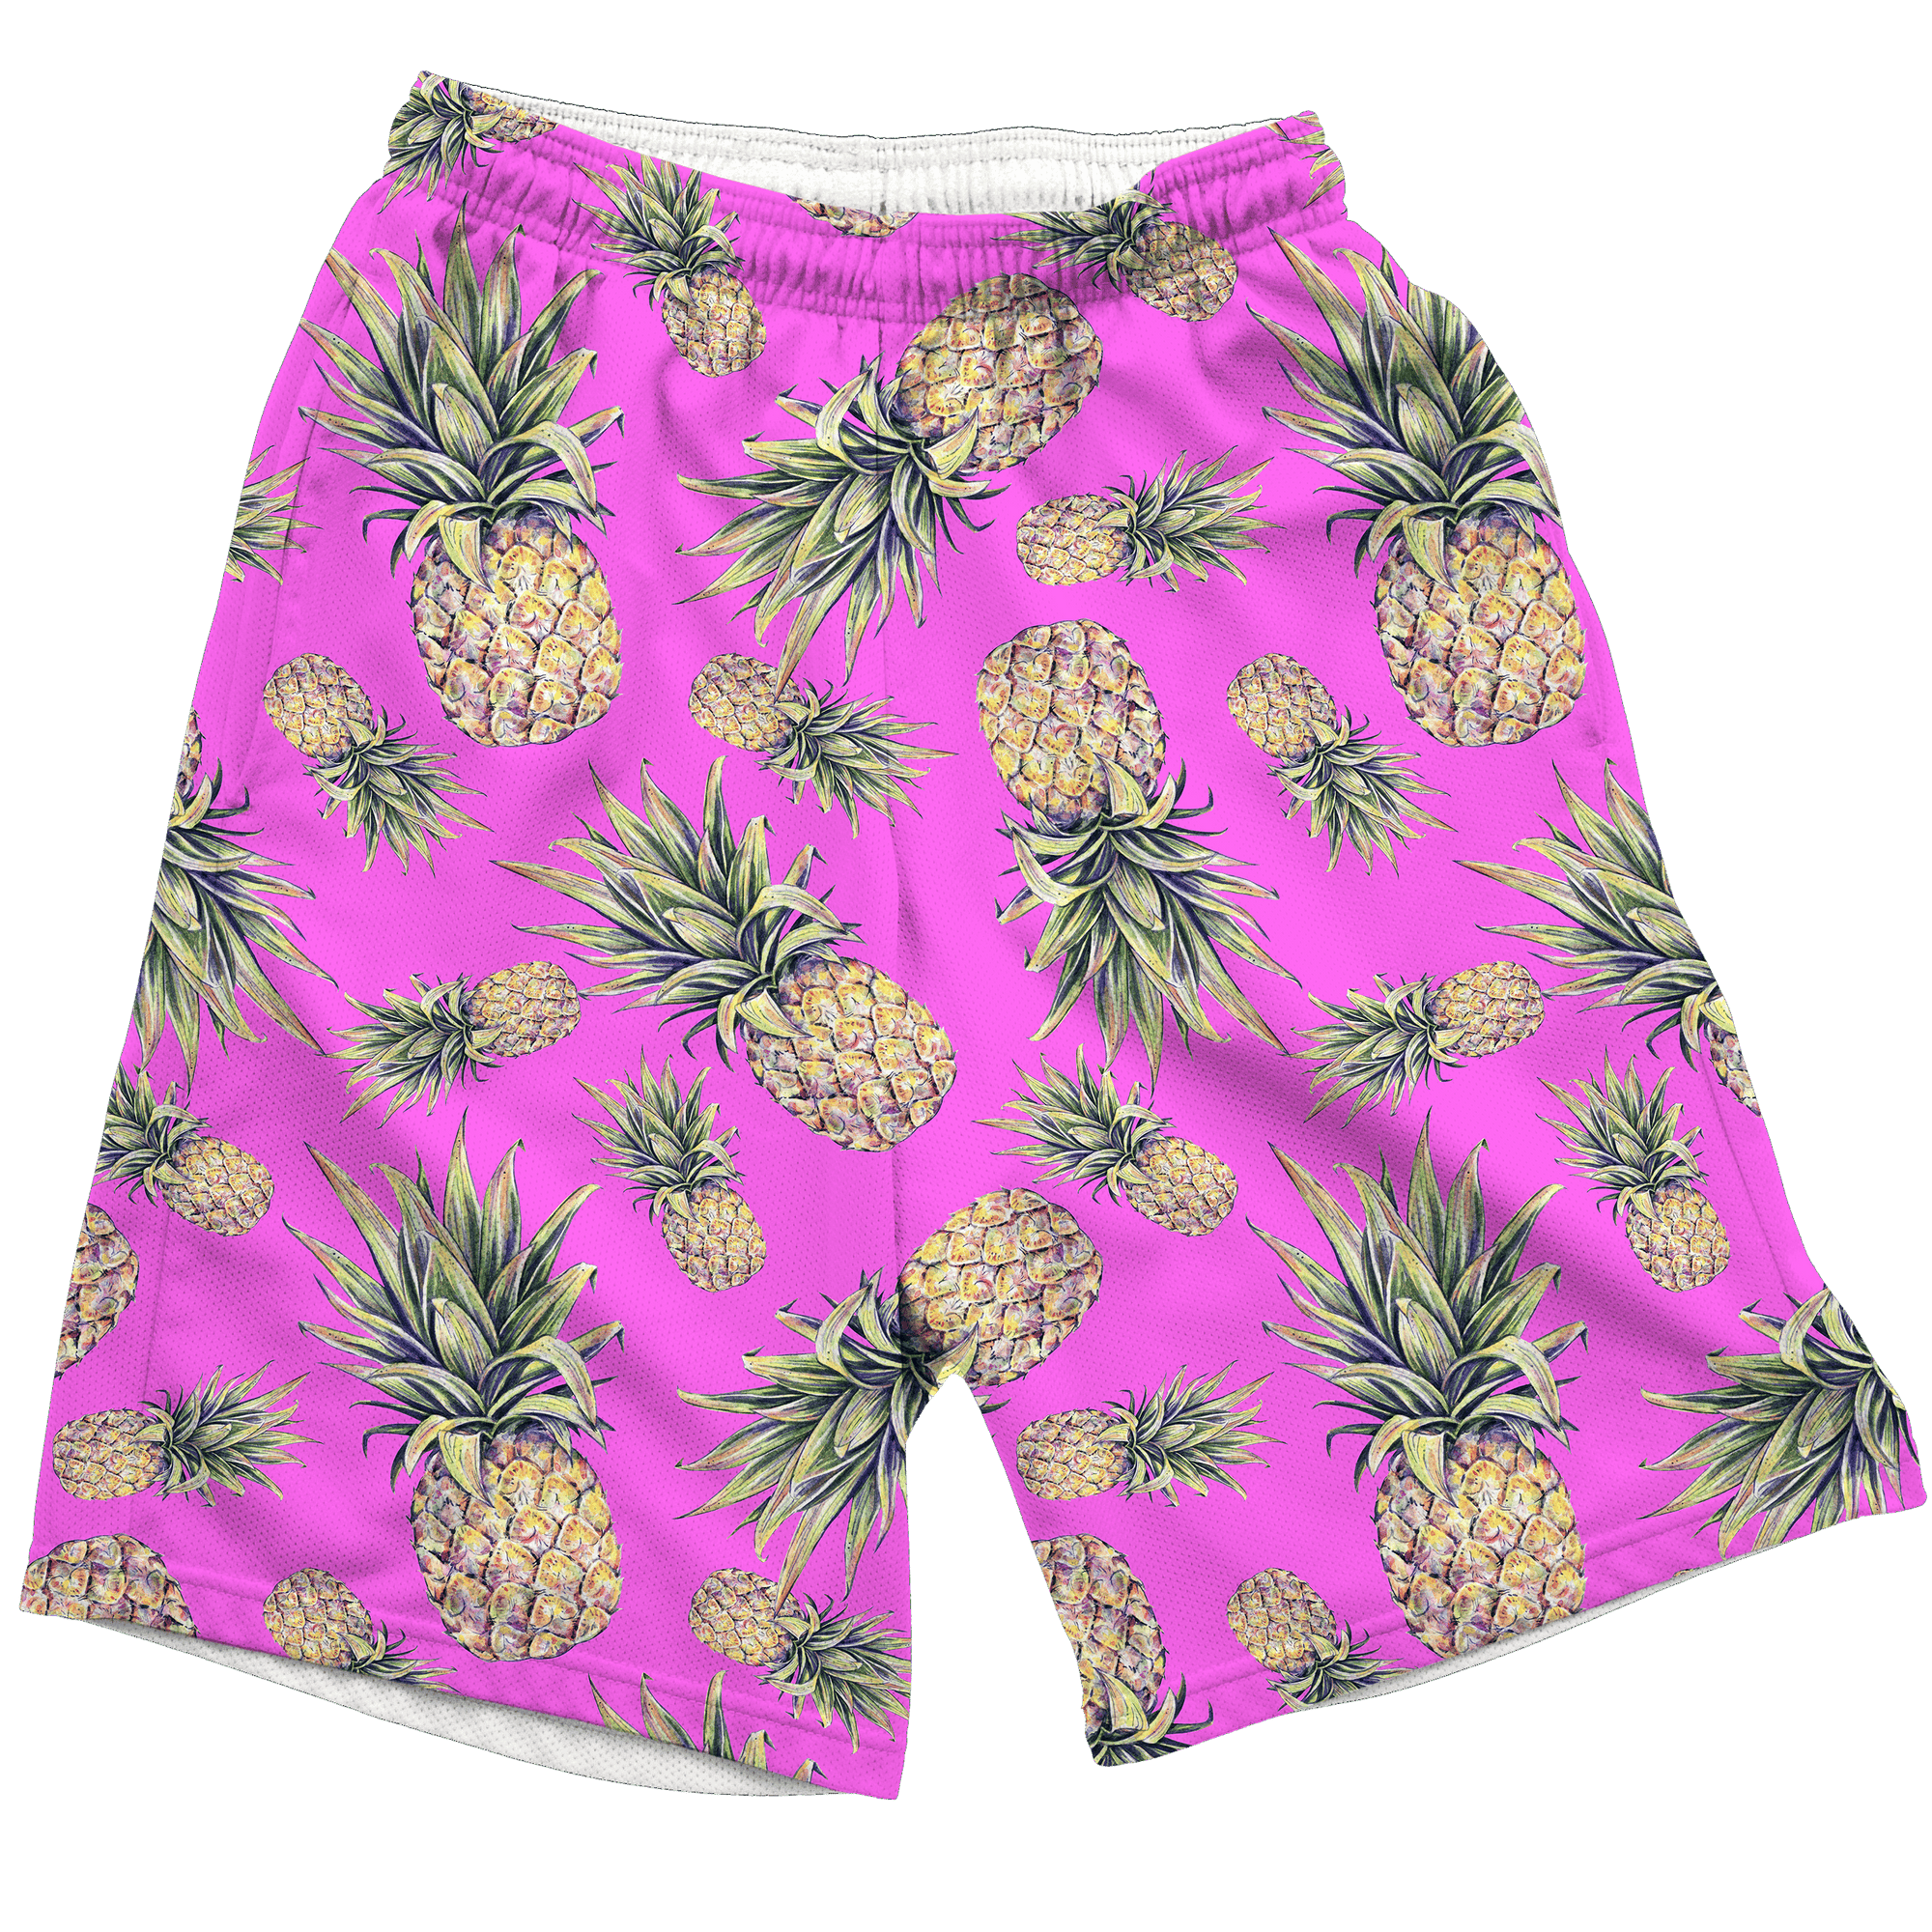 Pink Pineapple Shorts Mens Shorts T6 